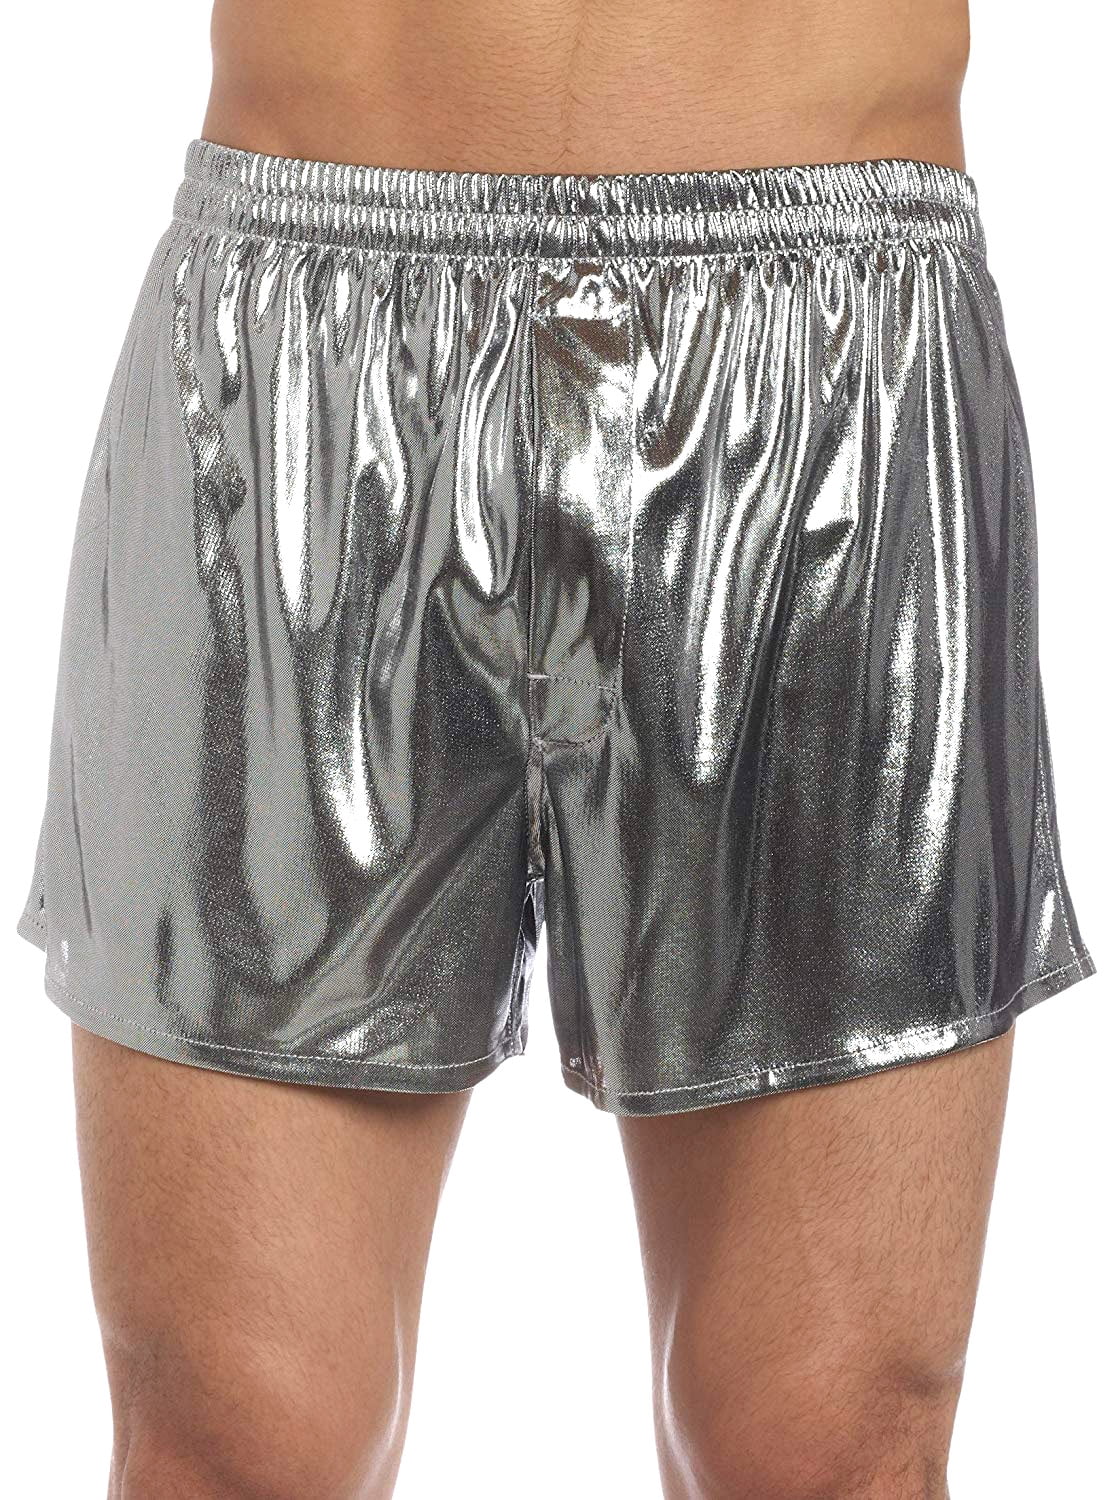 Intimo SOL Silver Boxer Underwear Short Large - Walmart.com